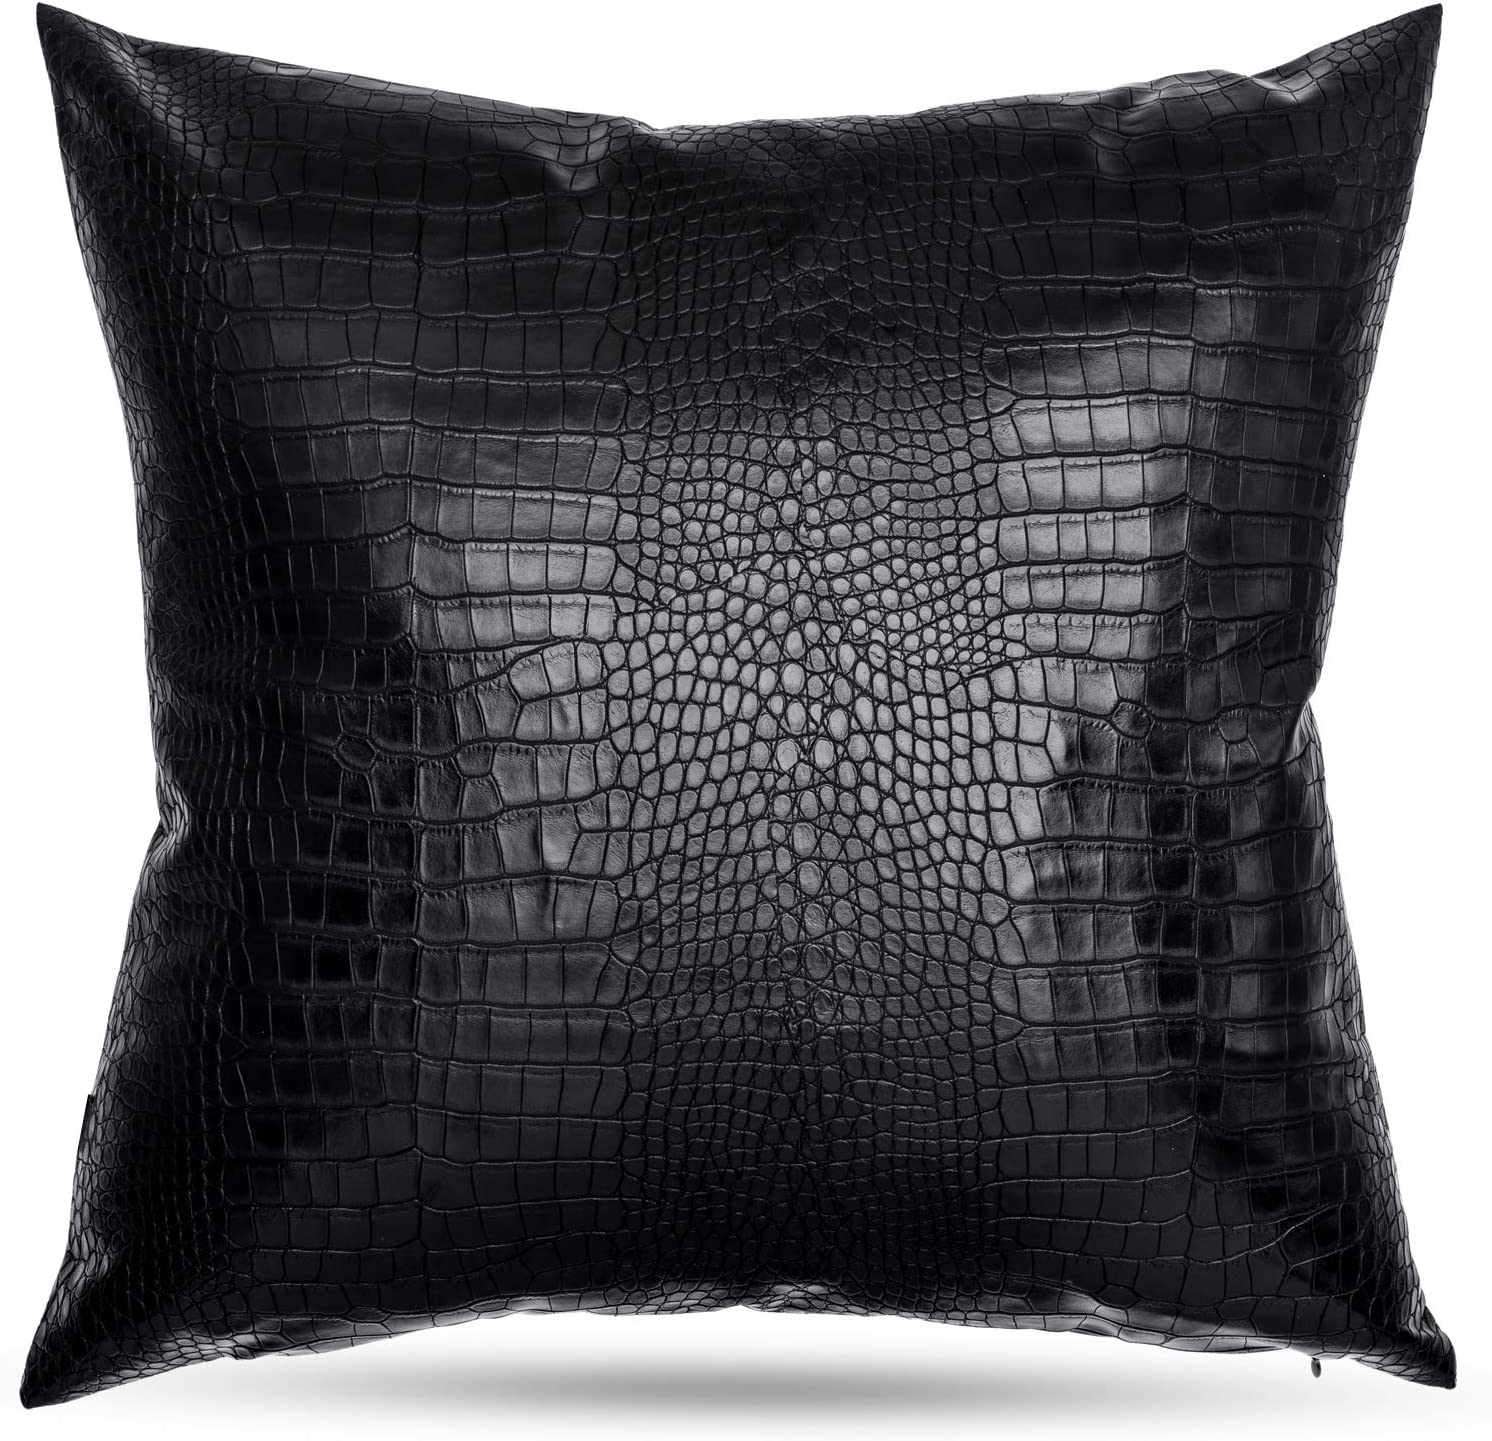 Crocodile Black Embossed Decorative Square Genuine Leather Pillow Cover -  HOTLEATHERWORLD